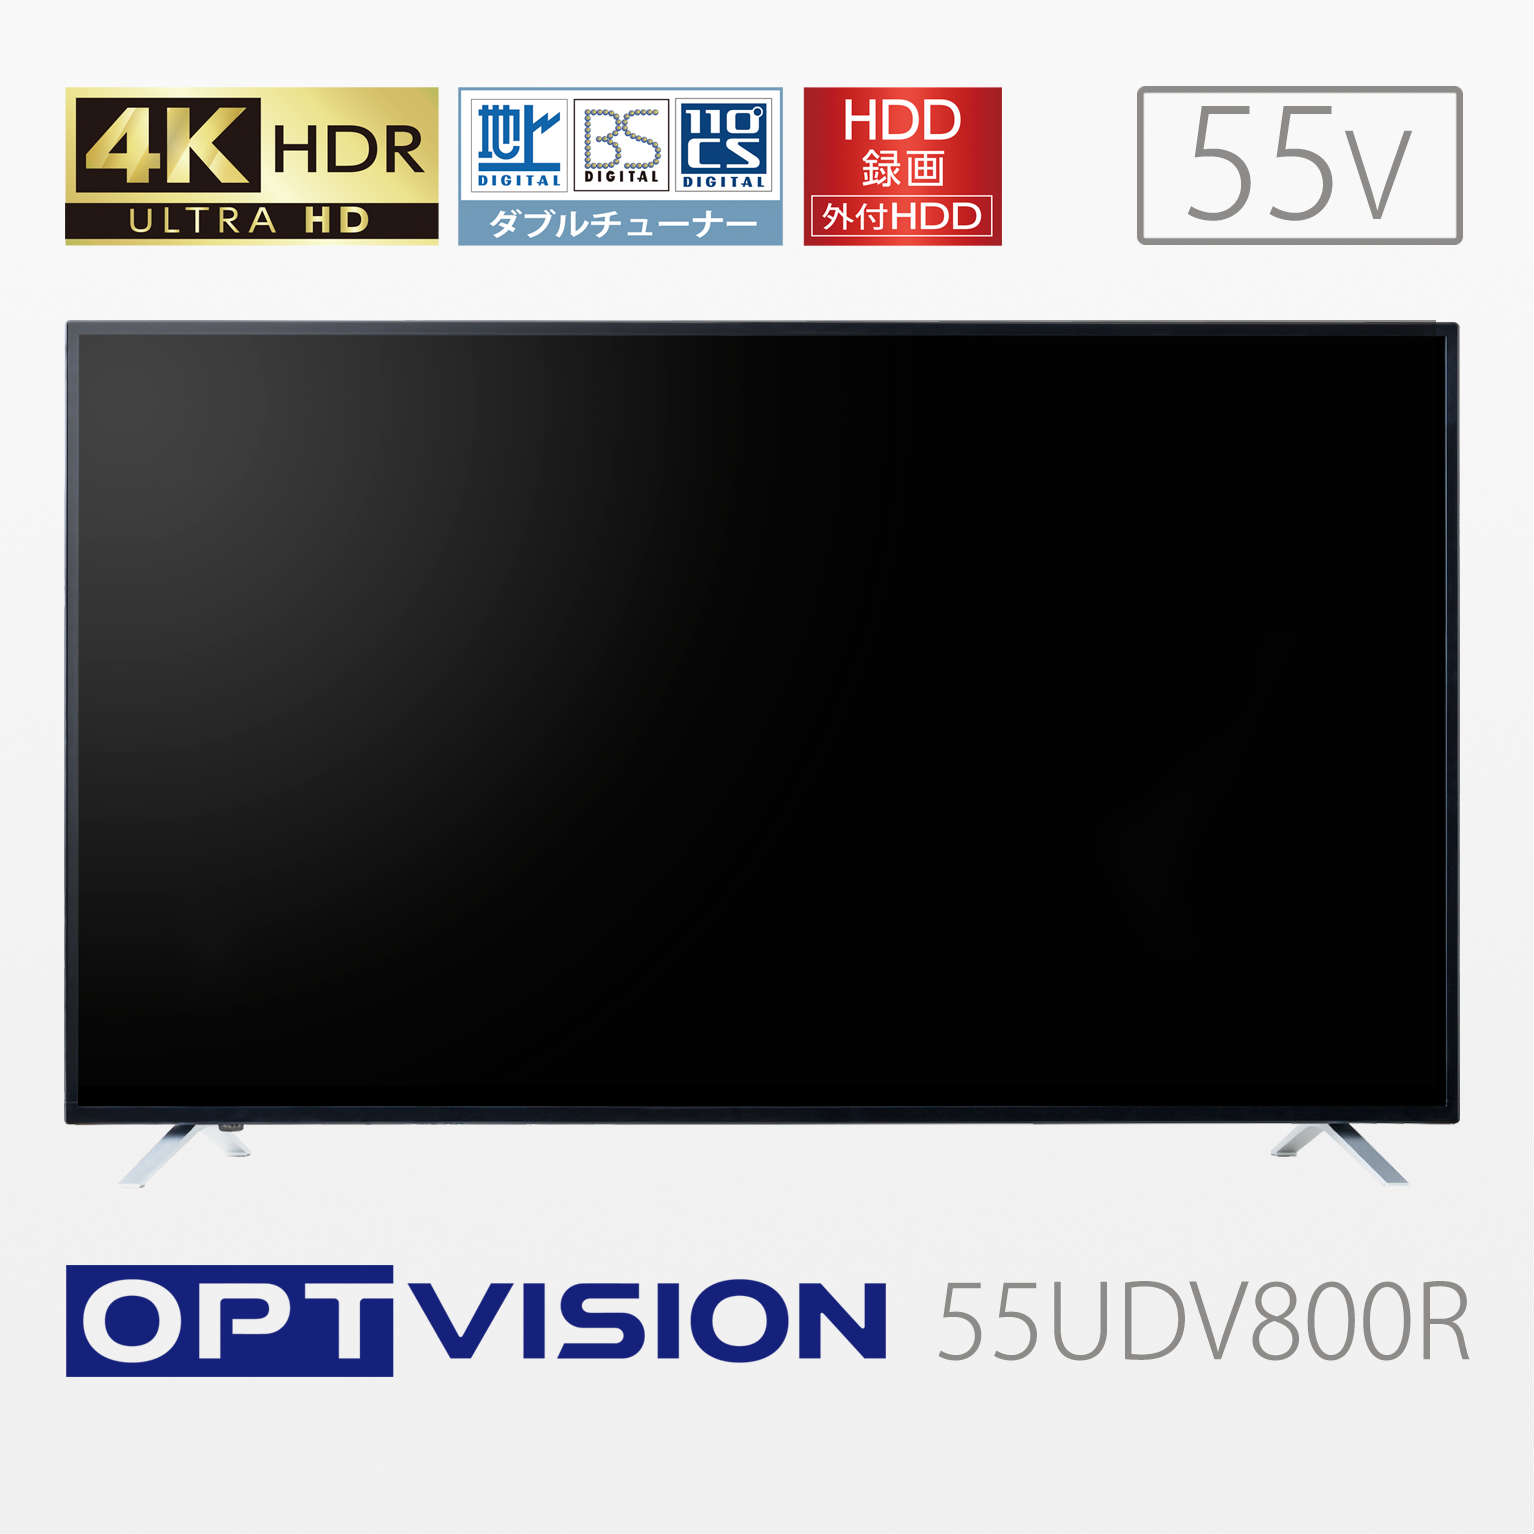 'OPTVISION 55v型 HDR対応4K液晶テレビ 55UDV800R（3年間延長保証なし設置サービスあり）'